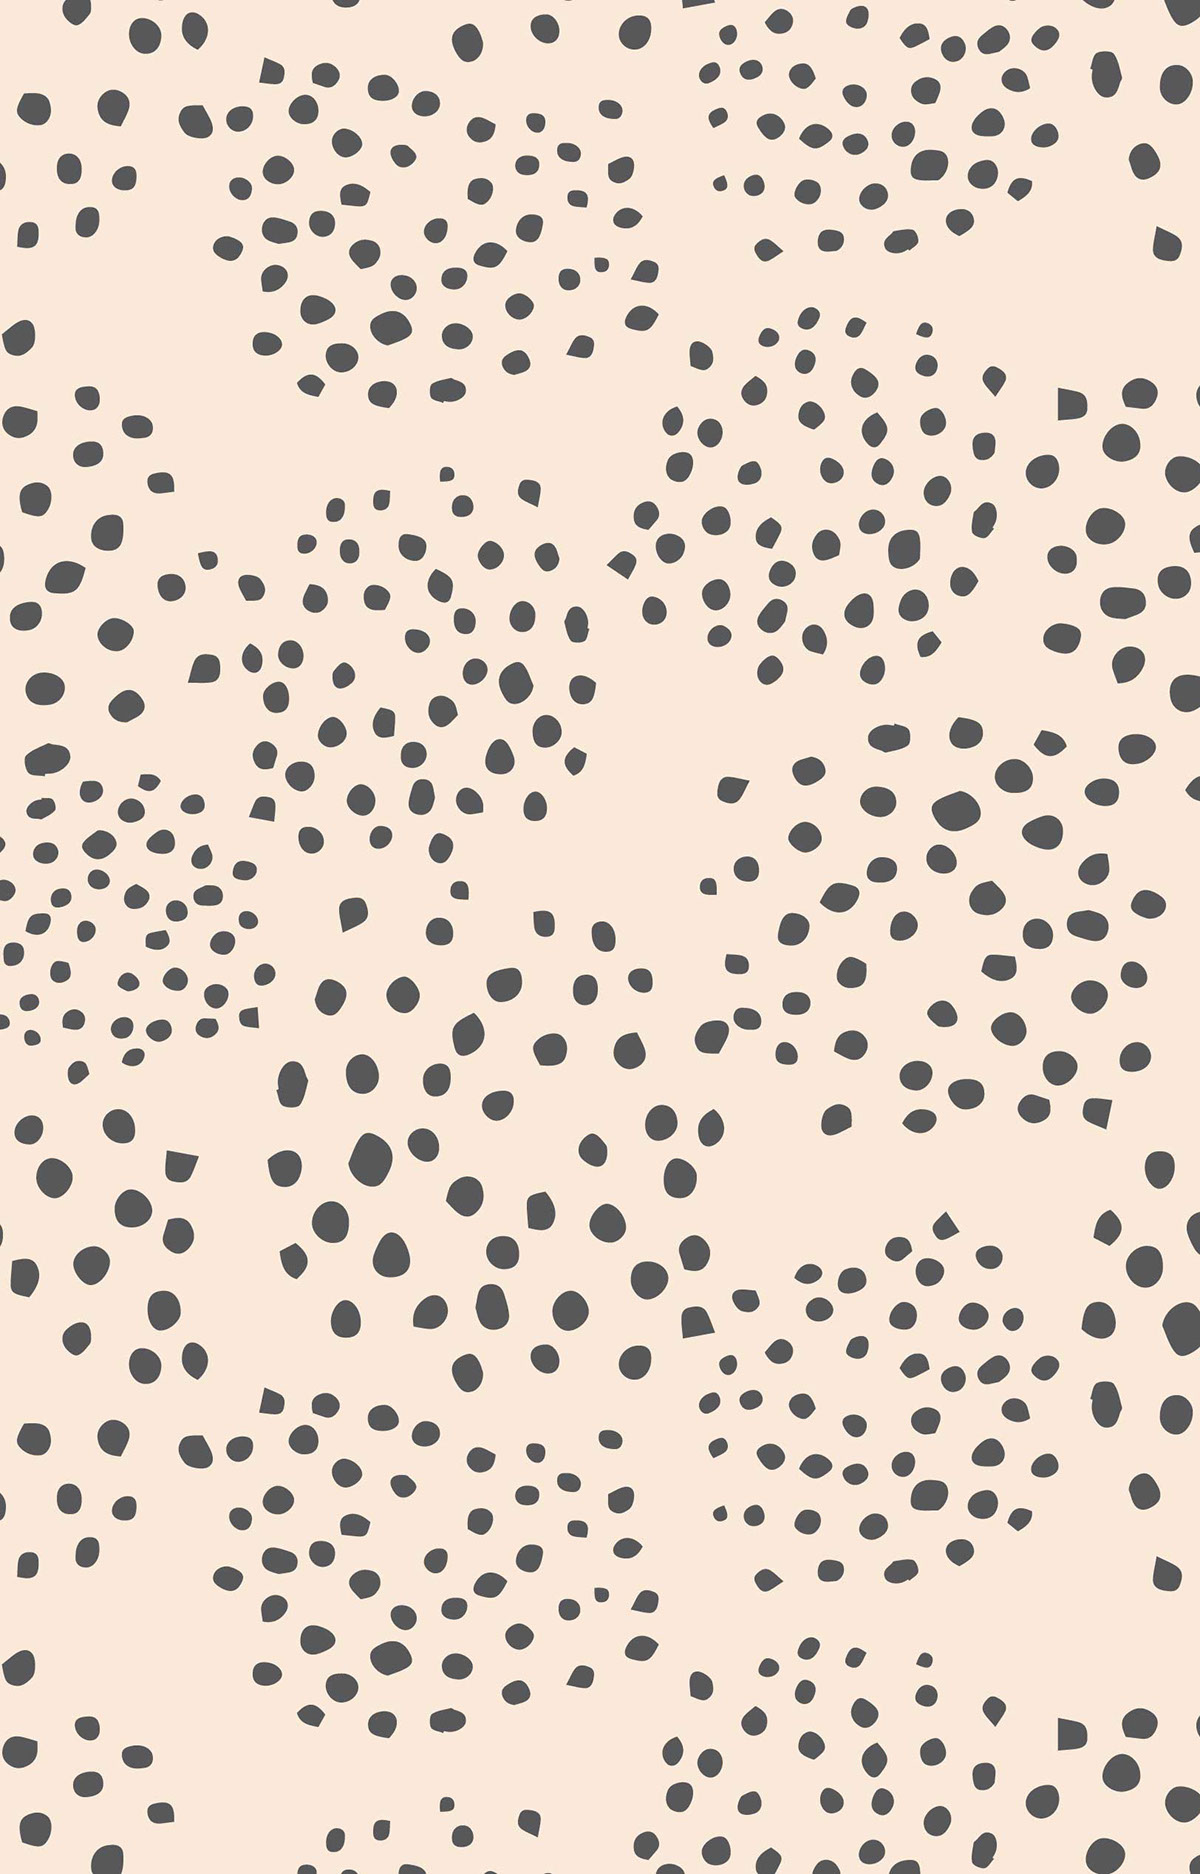 surfacepatterndesign Patterns surfacedesign textileprints print pattern